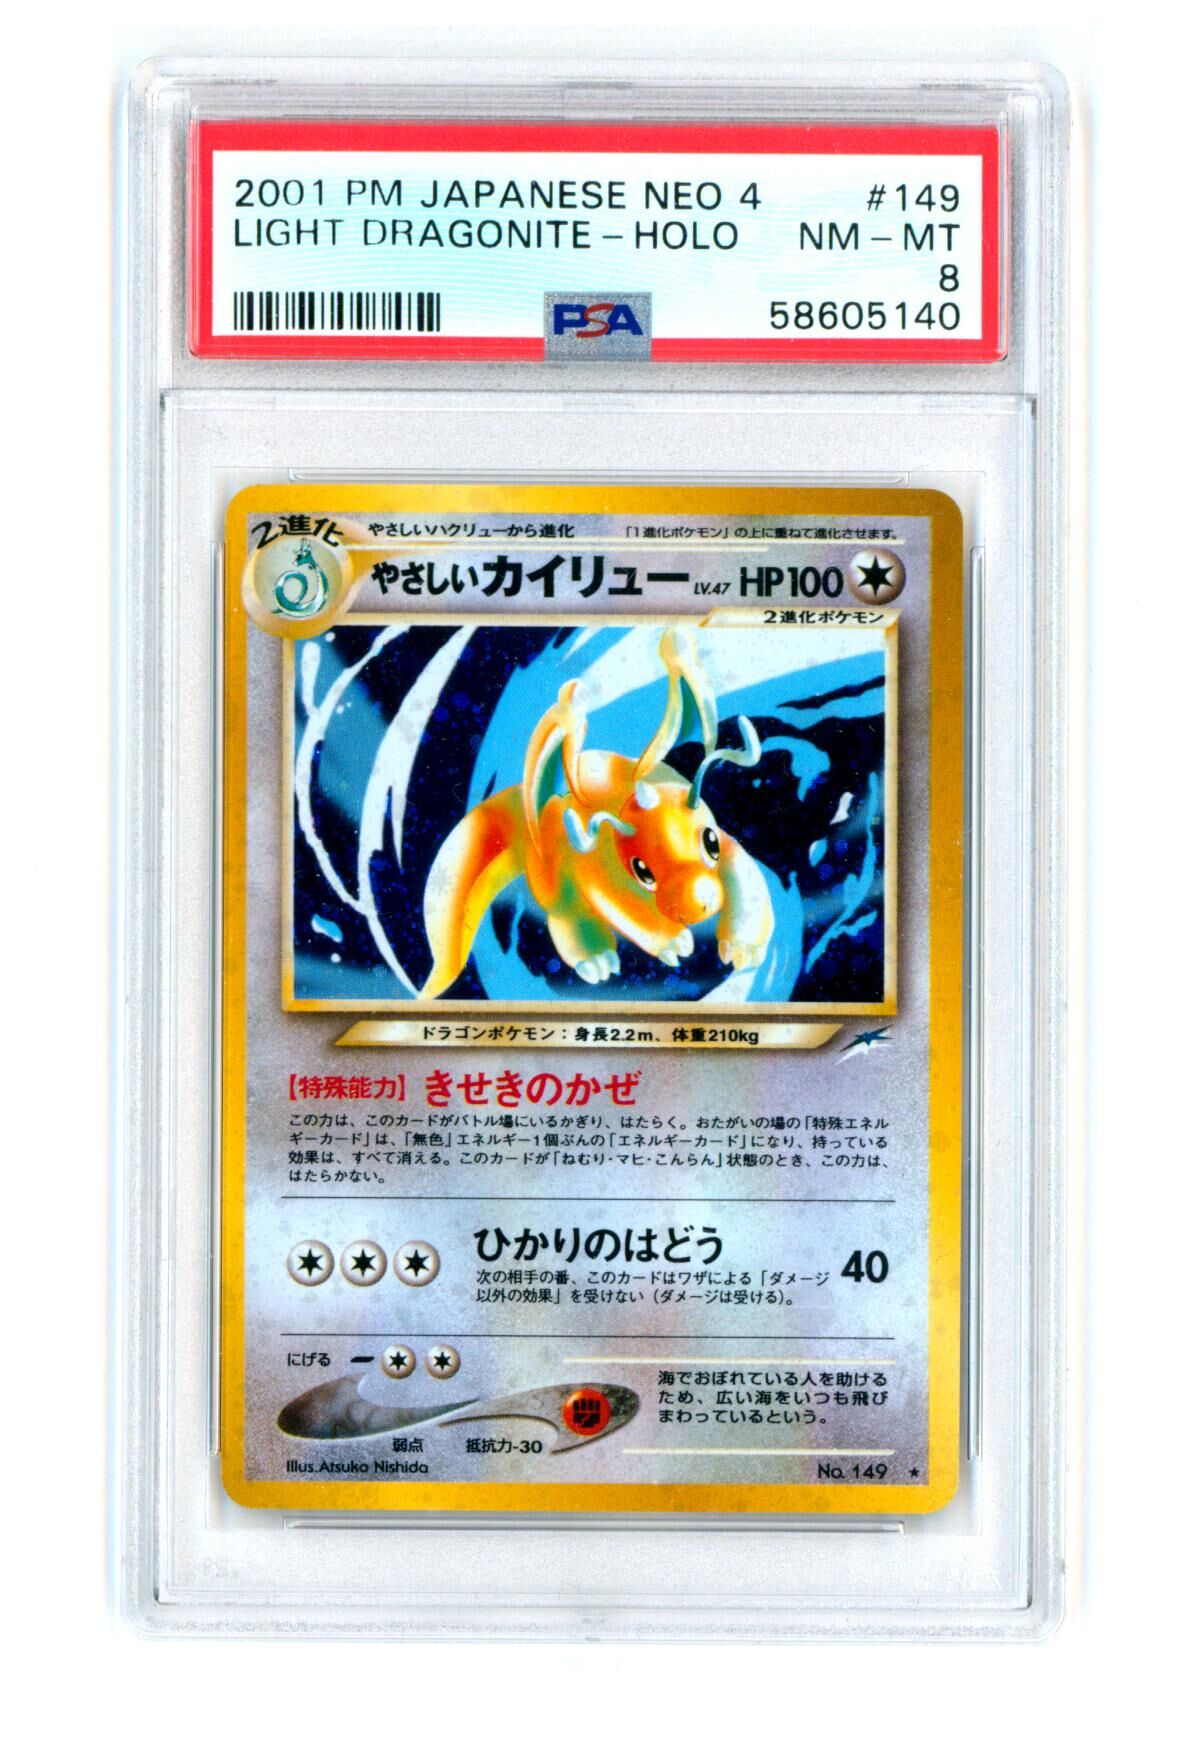 Light Dragonite - Neo 4 Darkness, and to Light... - Holo - PSA 8 NM-MT - Pokémon